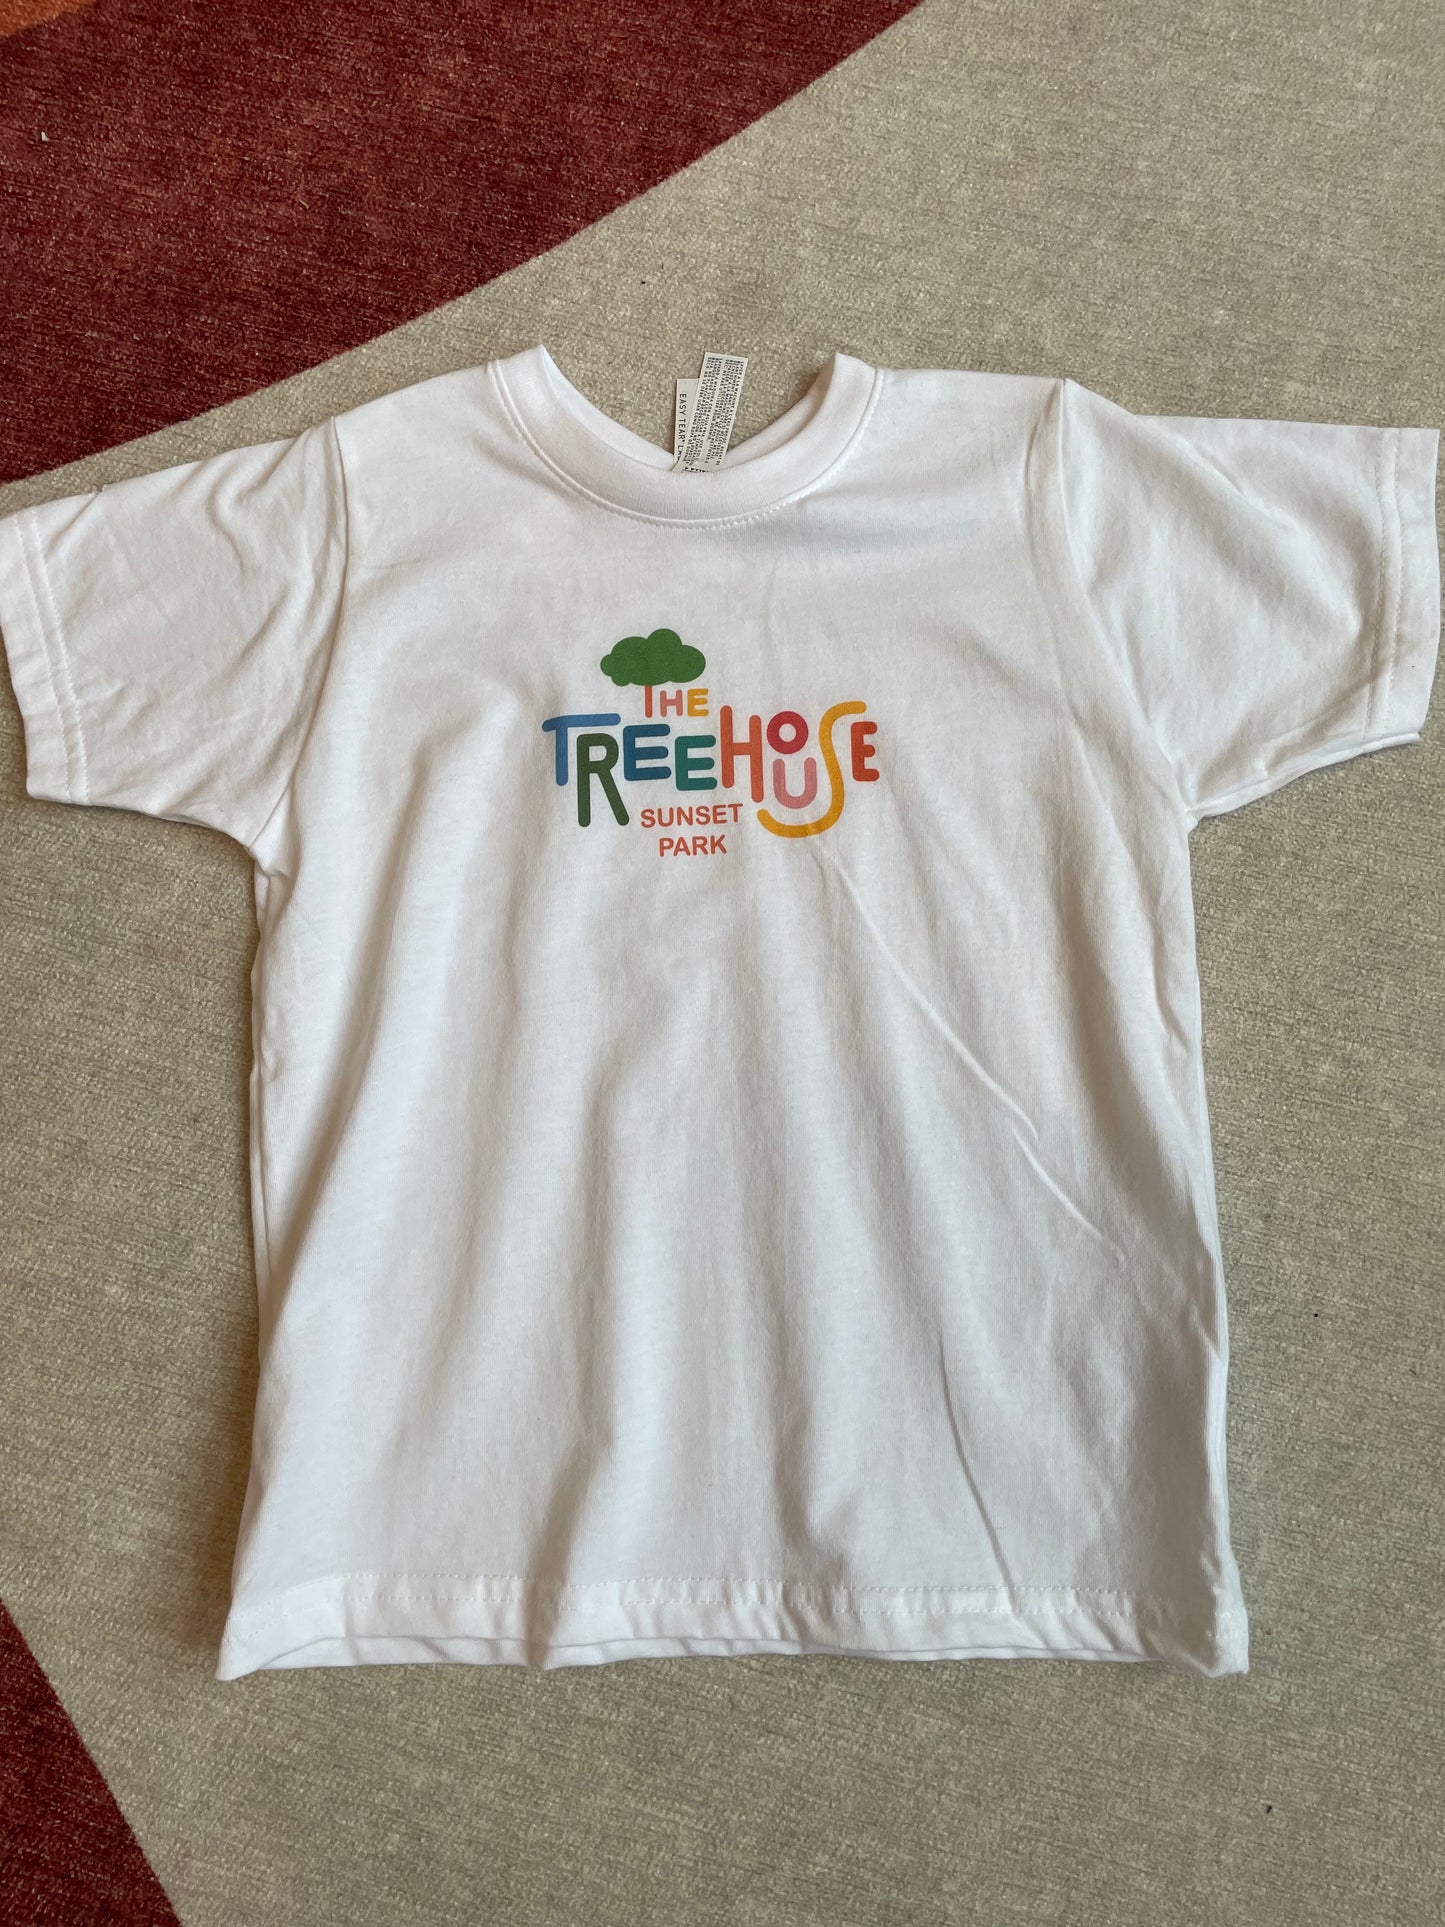 The Treehouse Sunset Park T-Shirt